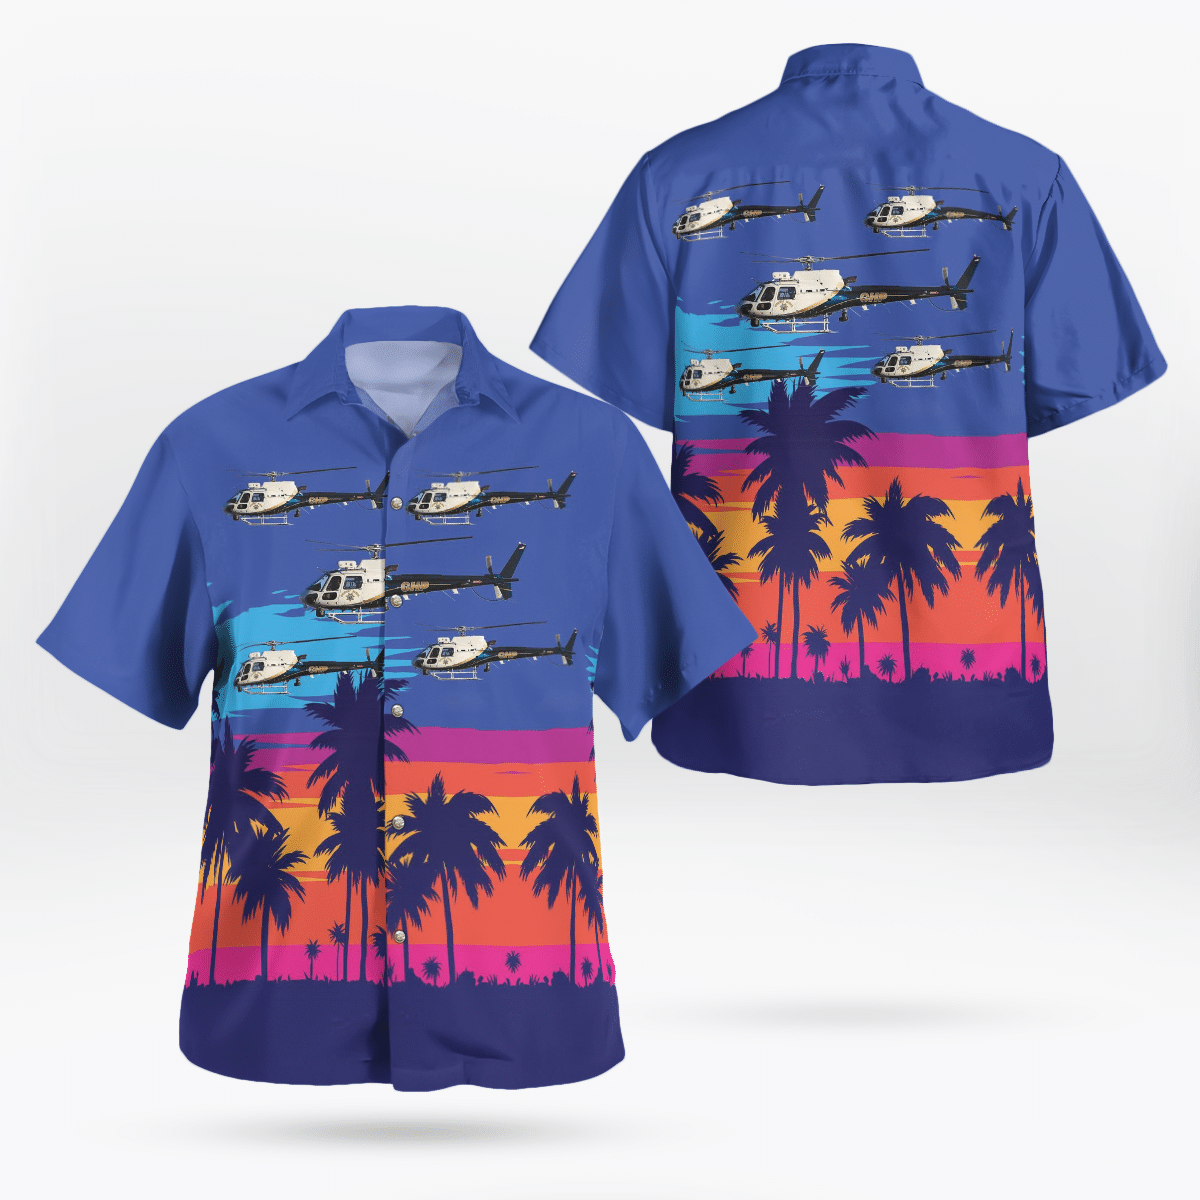 NEW CHP AS 350 B3 California Police Hawaii Shirt